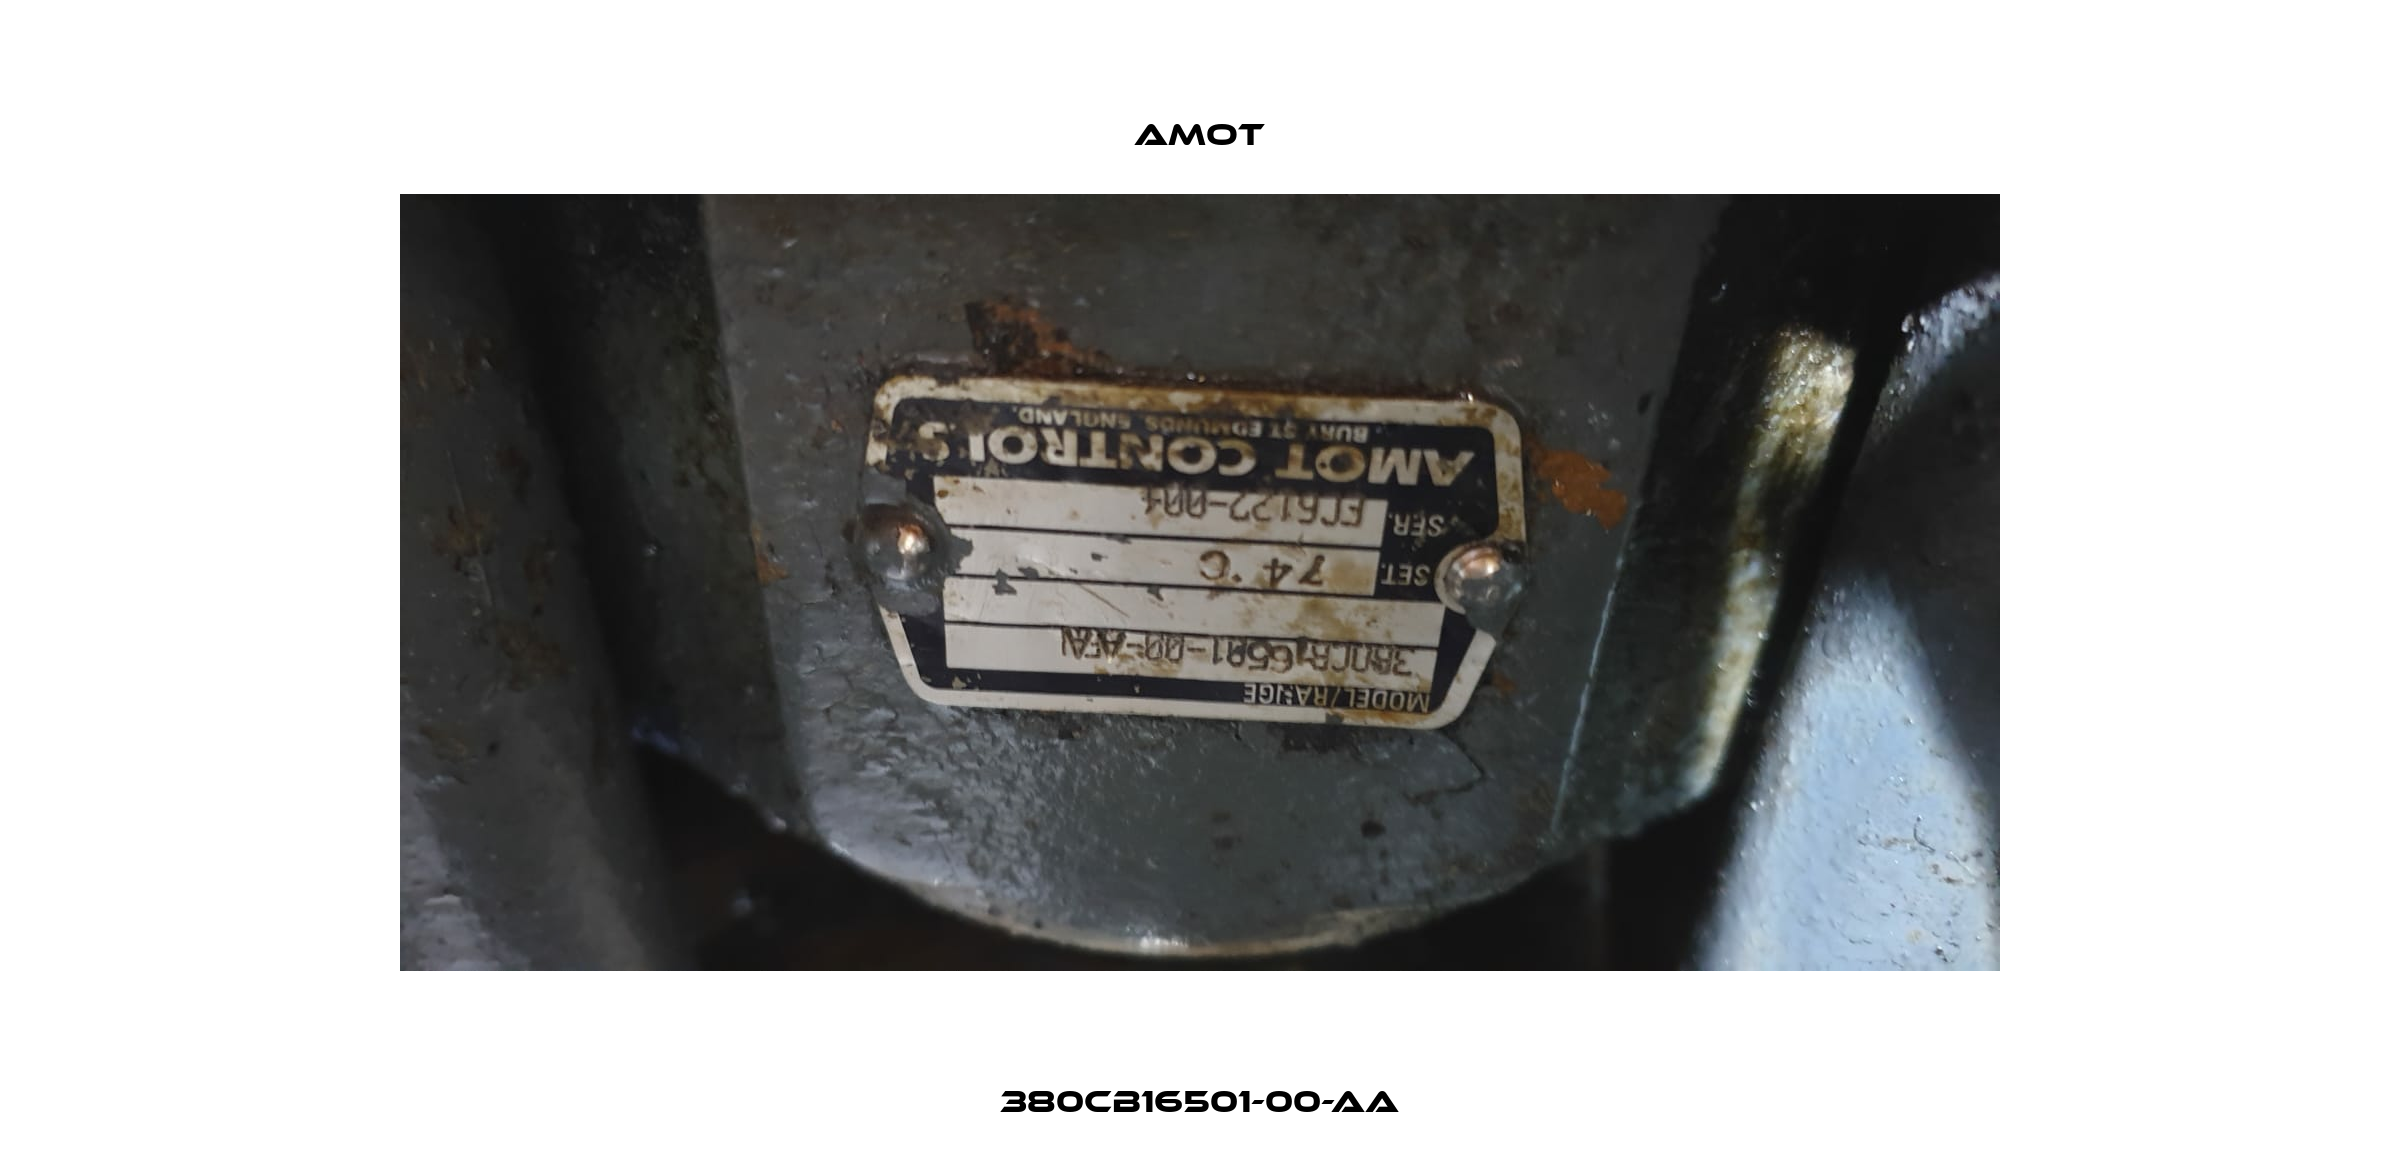 380CB16501-00-AA Amot